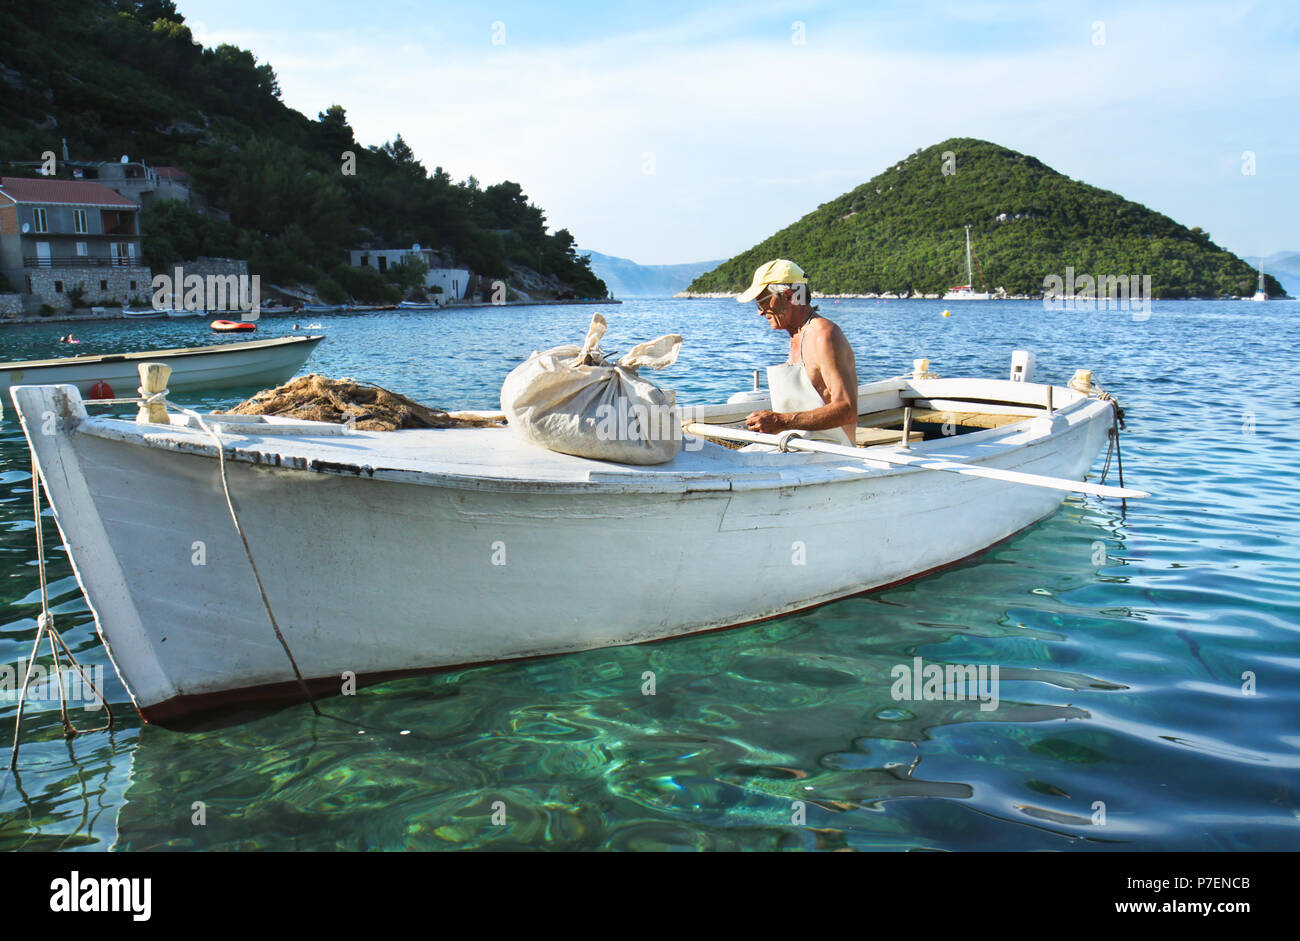 MJET, CROATIA - JULY 13 : Fishing in wooden boat at Adriatic sea by local fishermen July 13, 2010 in Mljet, Croatia Stock Photo